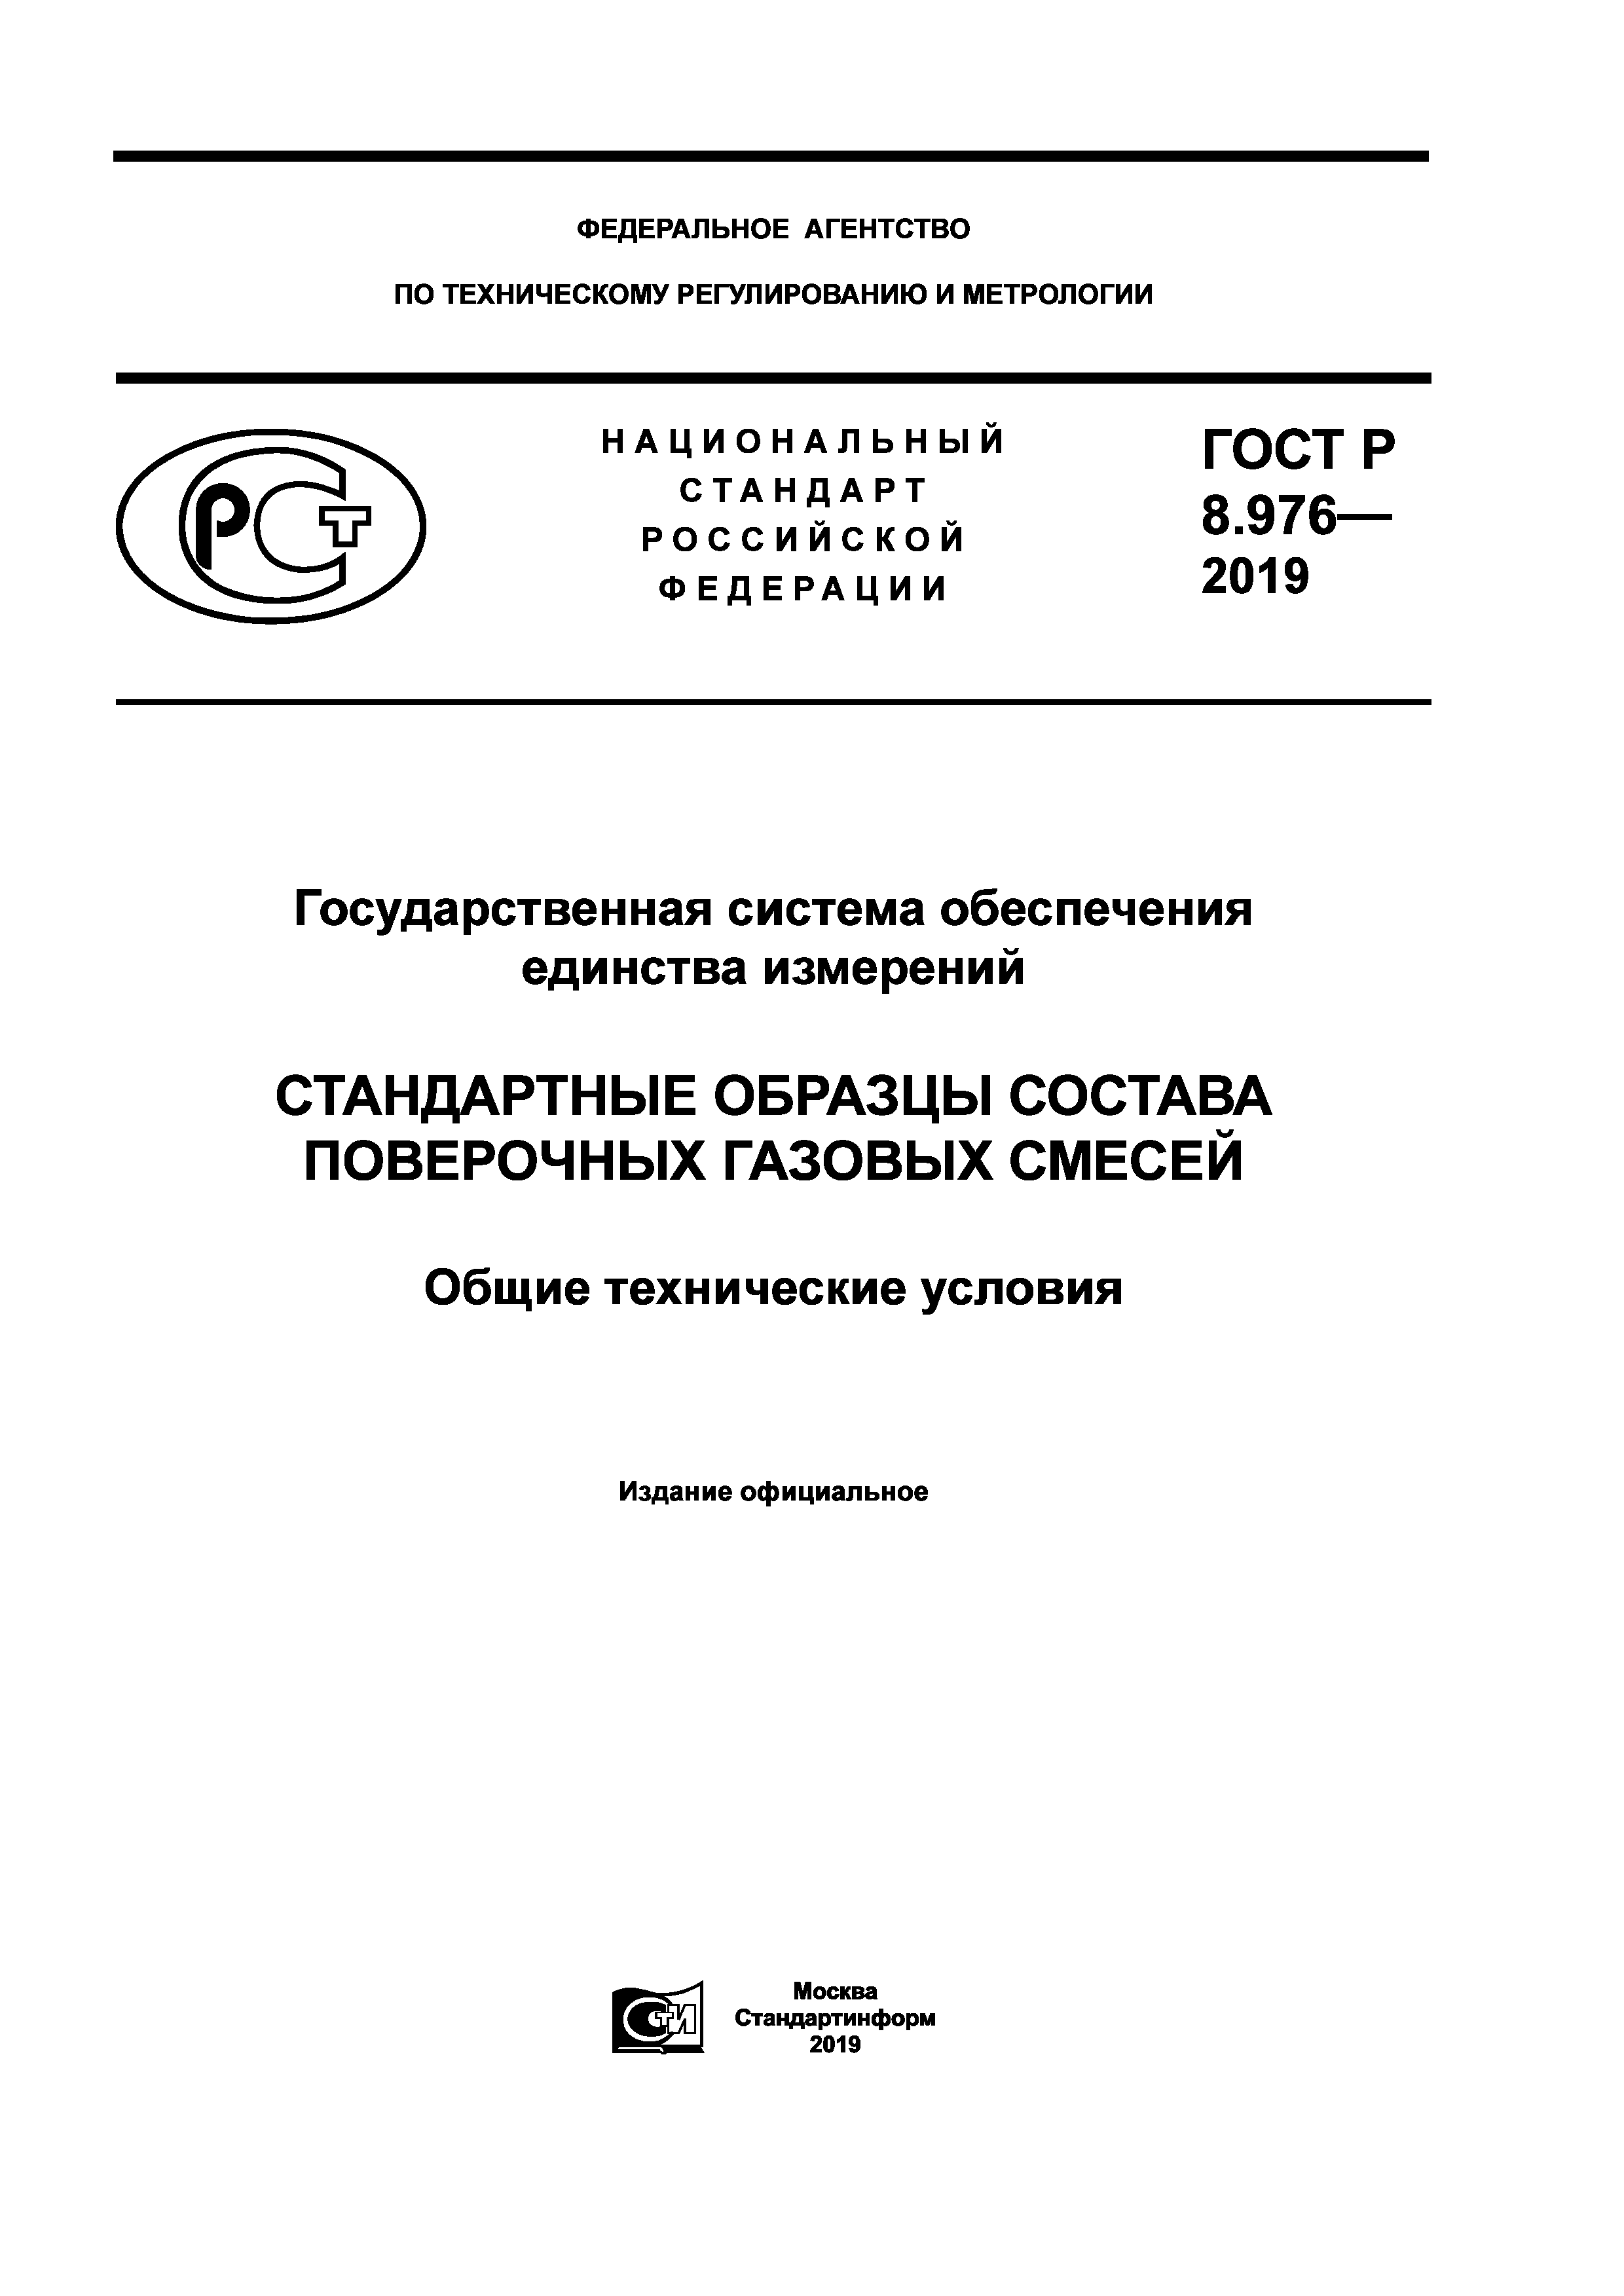 ГОСТ Р 8.976-2019